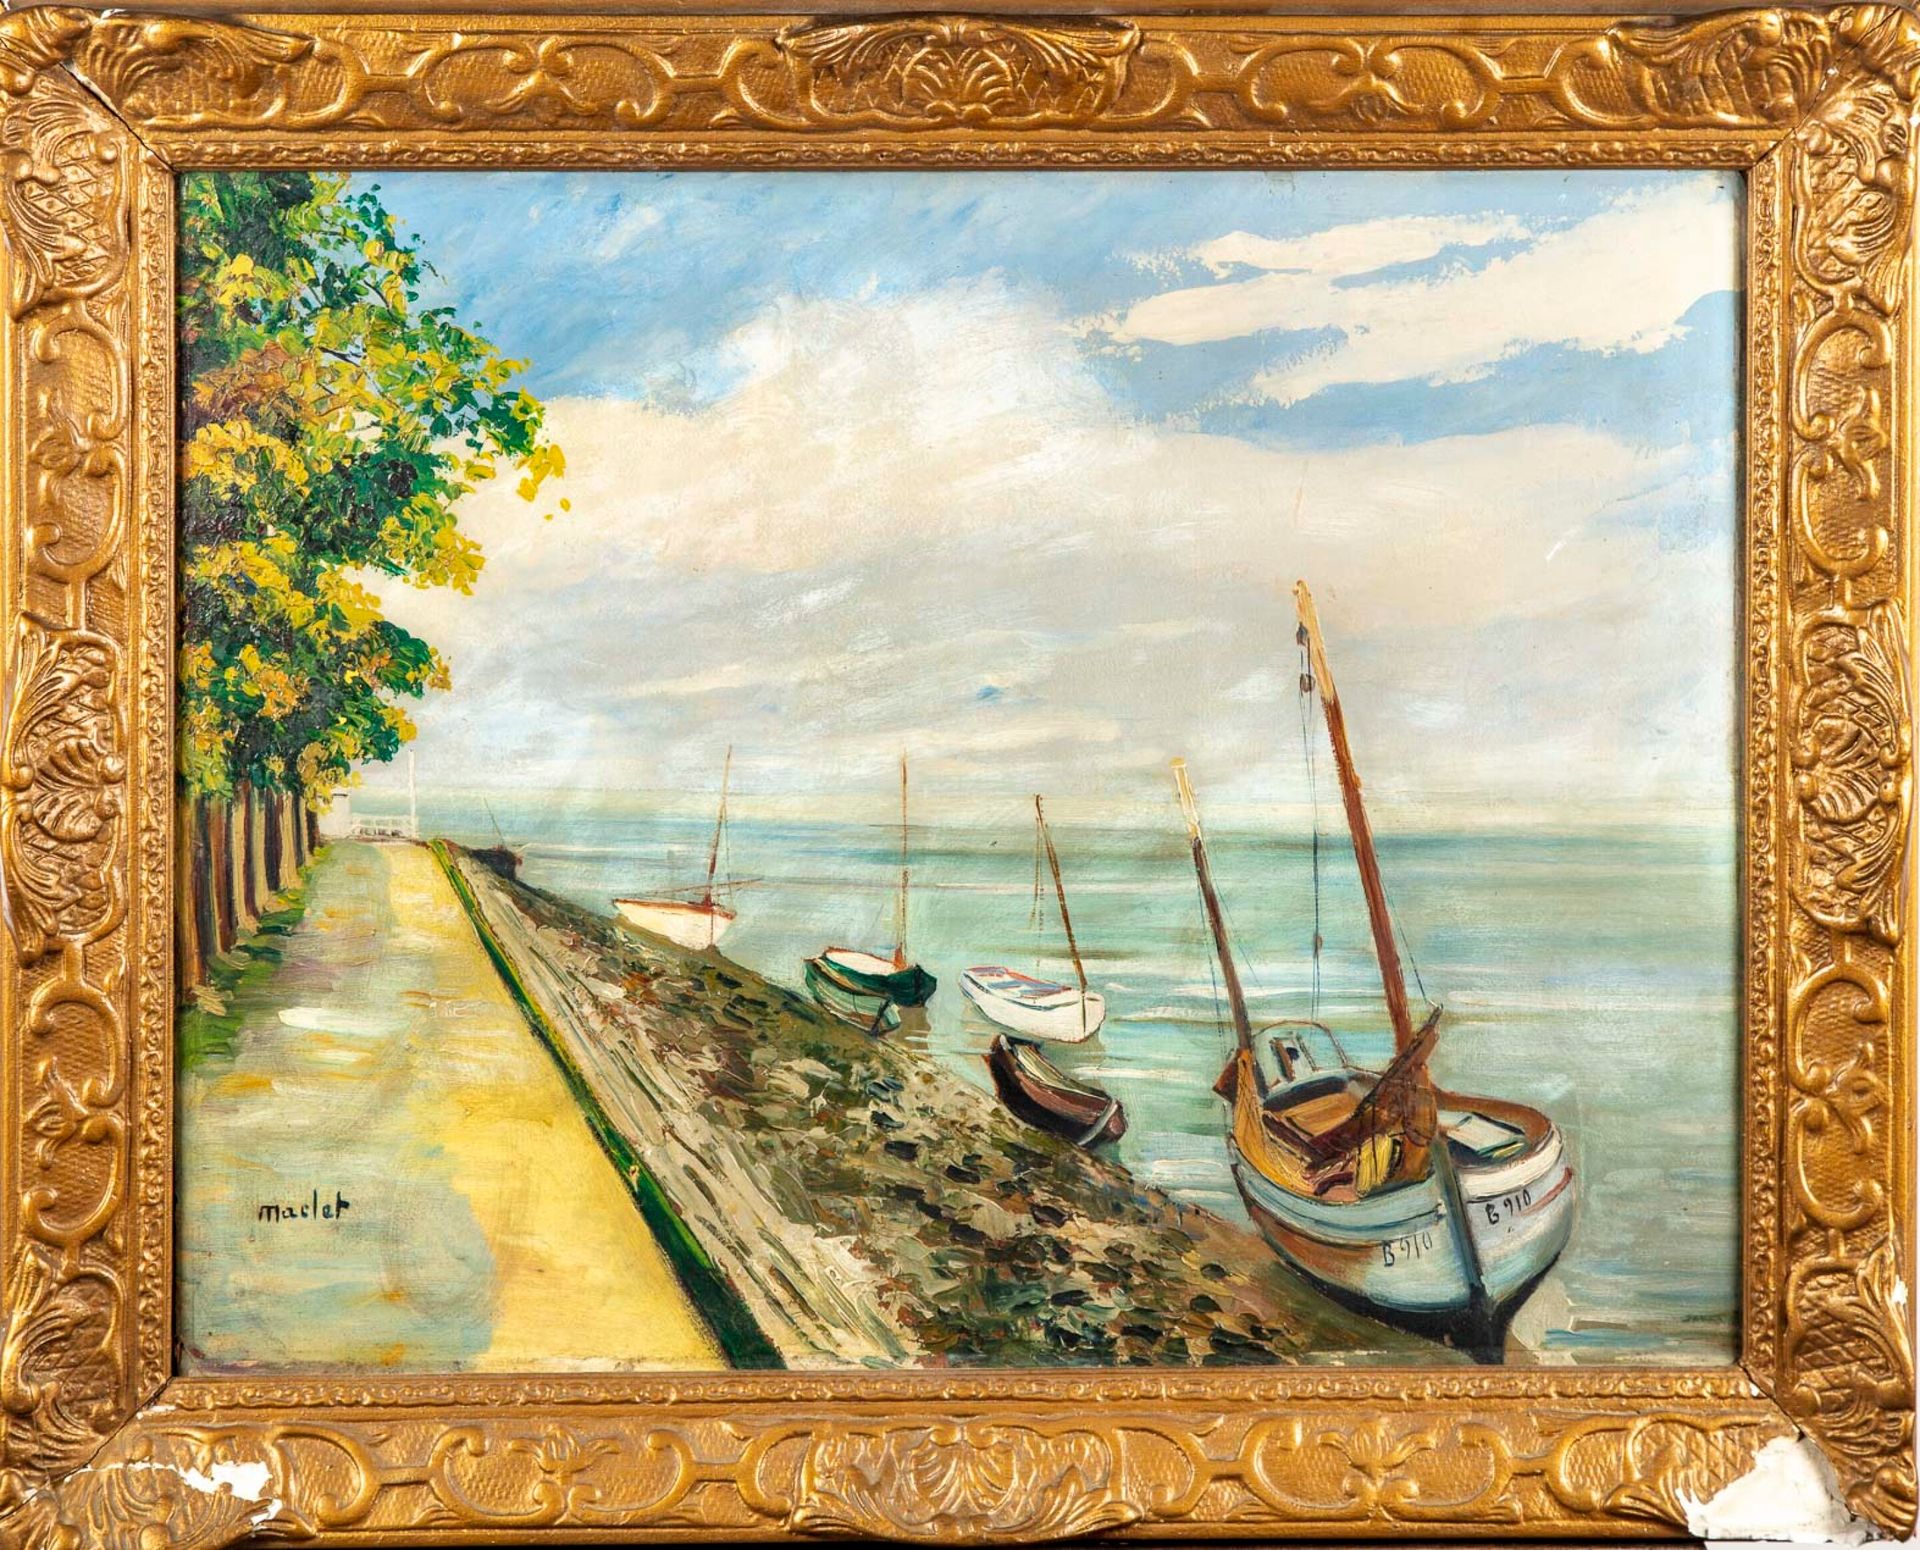 Élisée MACLET Elisée MACLET (1881-1962)

Seaside with Sailboats

Oil on cardboar&hellip;